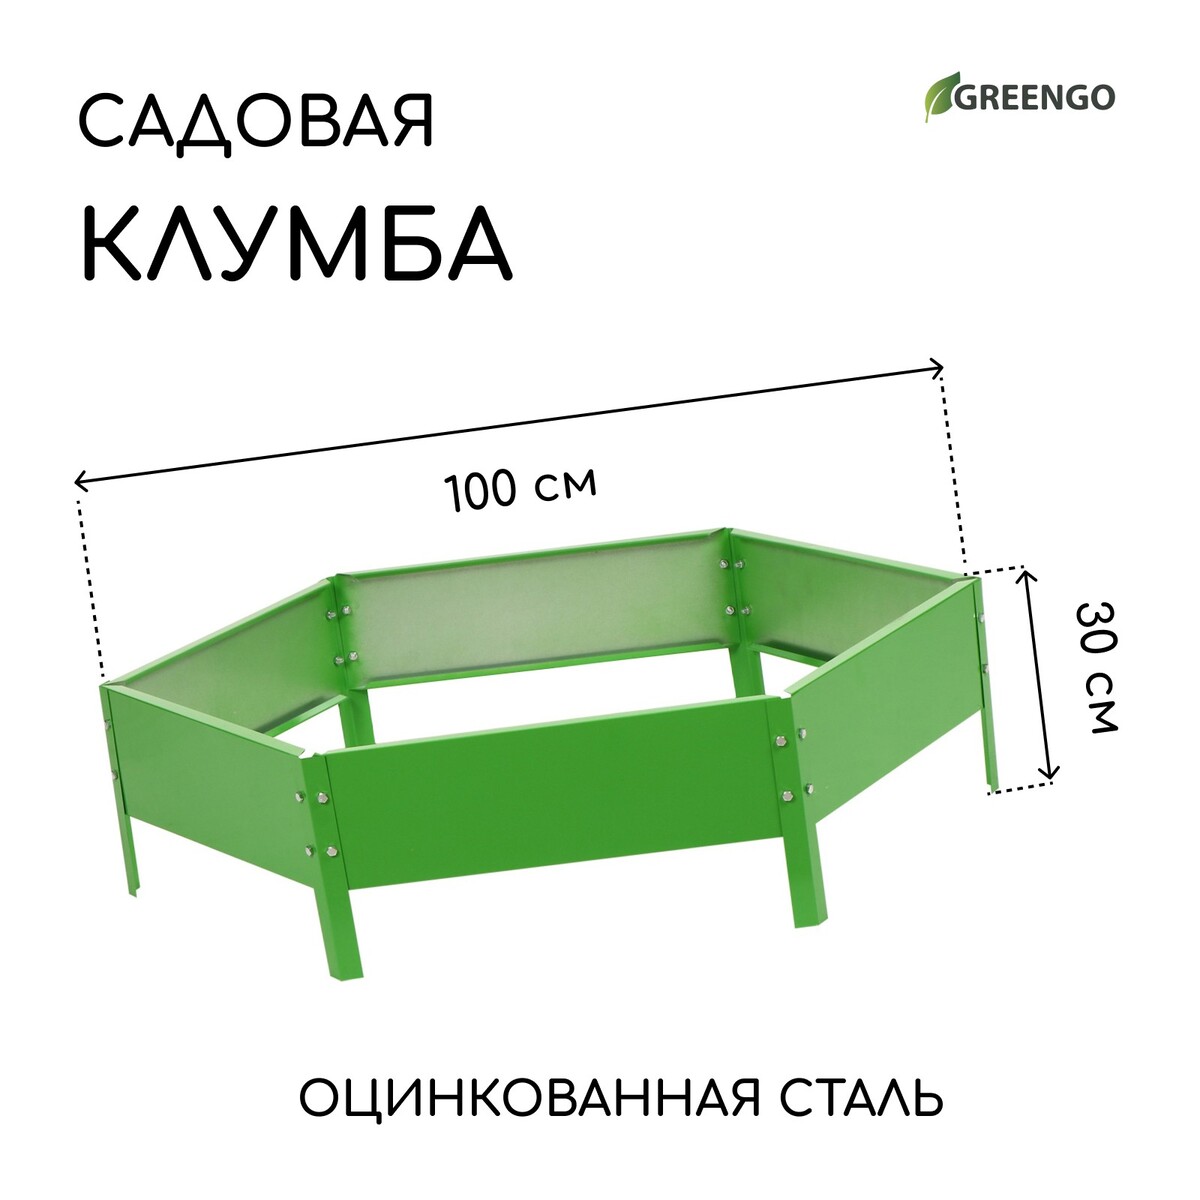 Клумба оцинкованная, d = 100 см, h = 15 см, ярко-зеленая, greengo клумба оцинкованная 50 × 50 × 15 см оранжевая